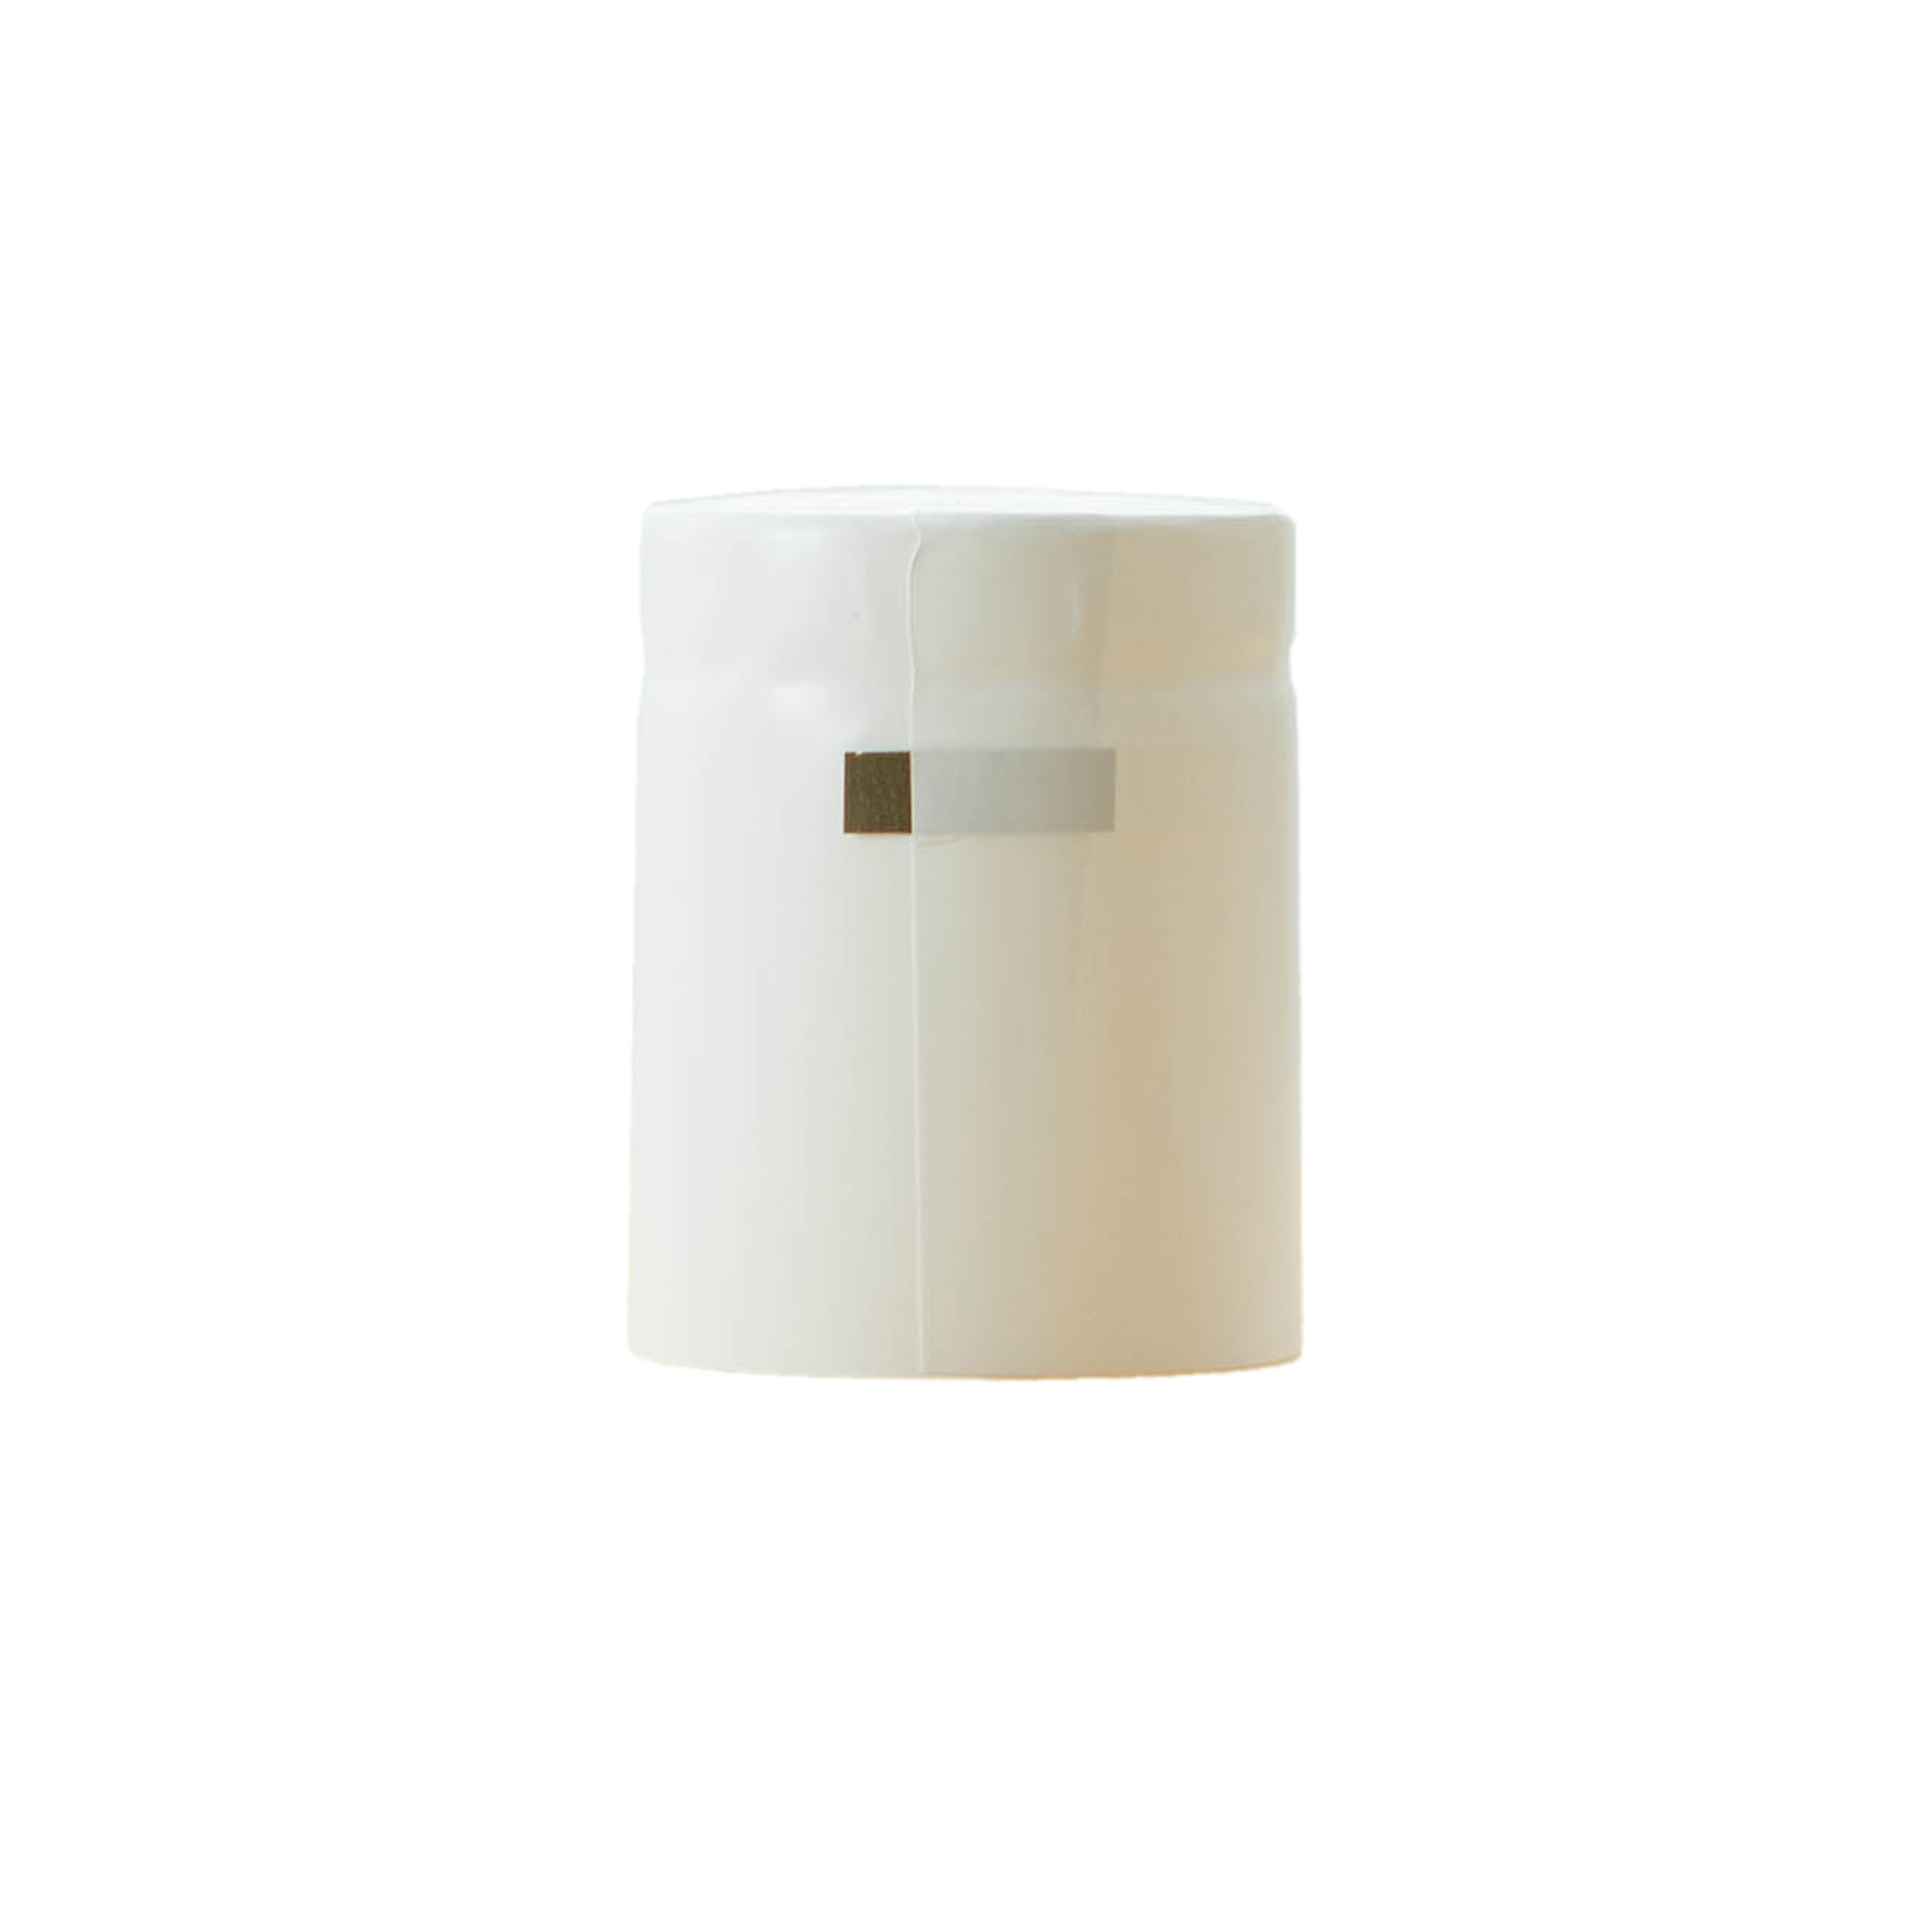 Heat shrink capsule 32x41, PVC plastic, white